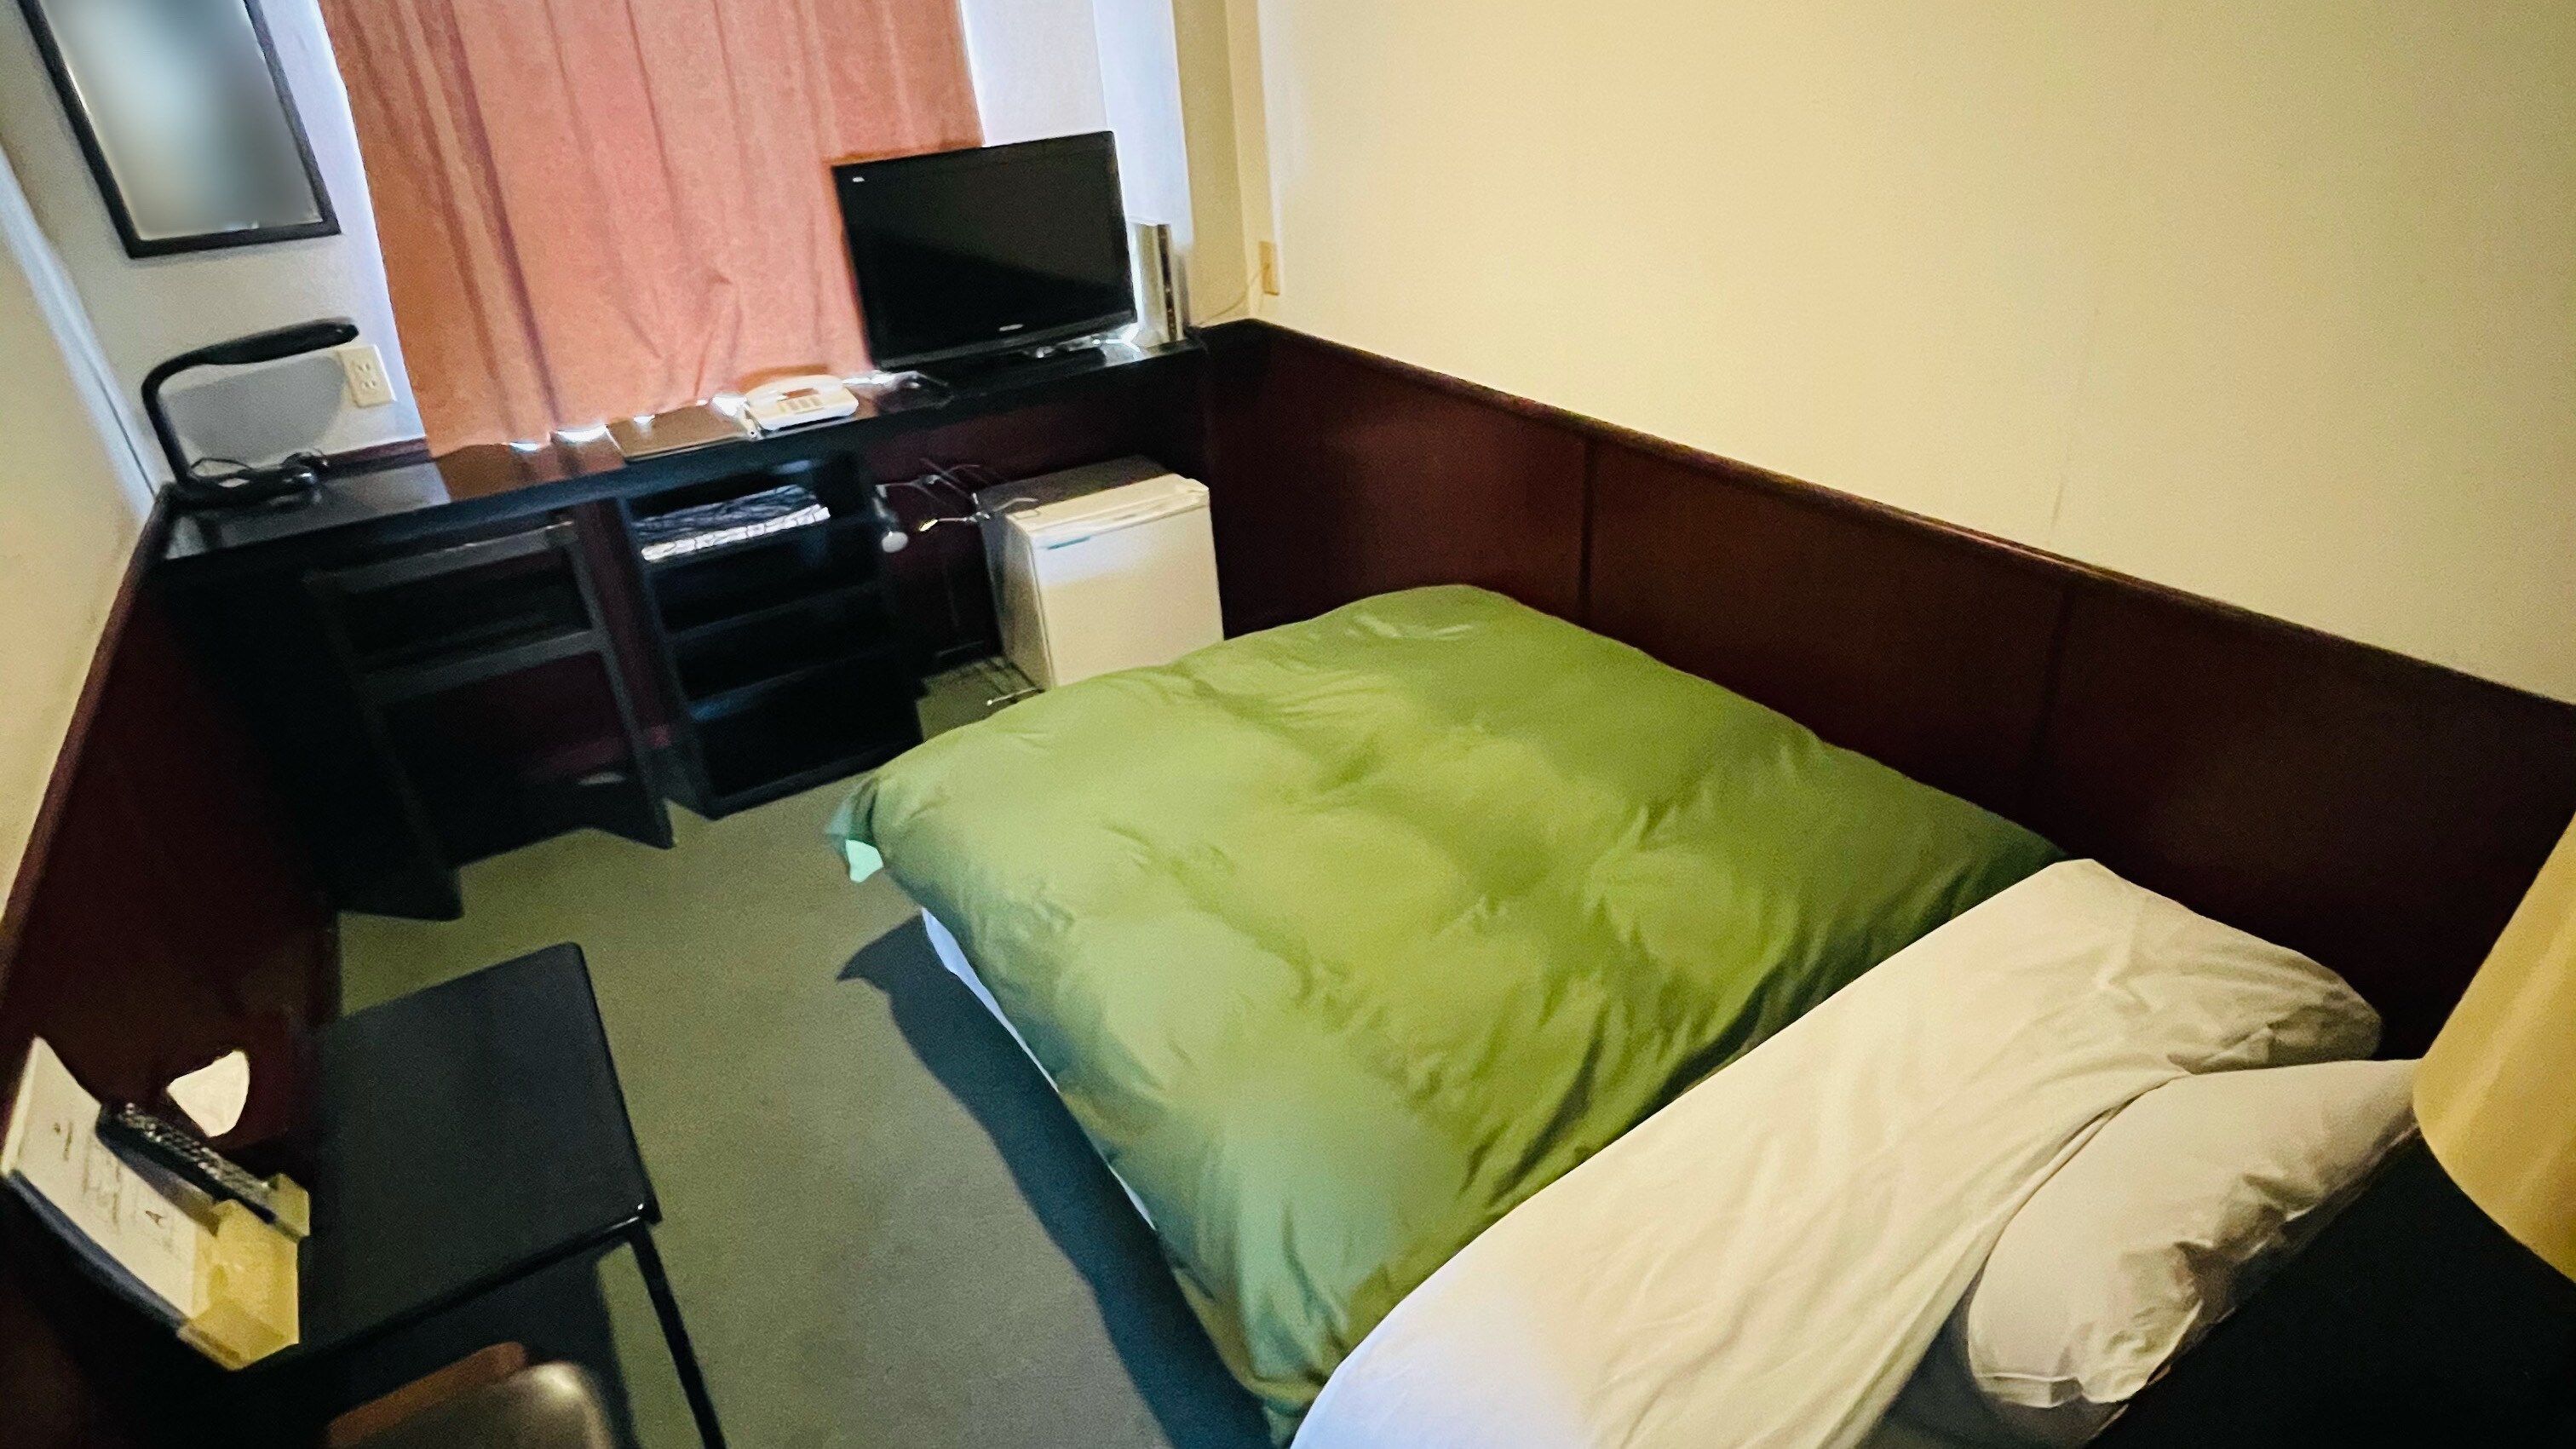 ・<SDS房>备有小双人床！请将其用于工作和观光等各种目的。